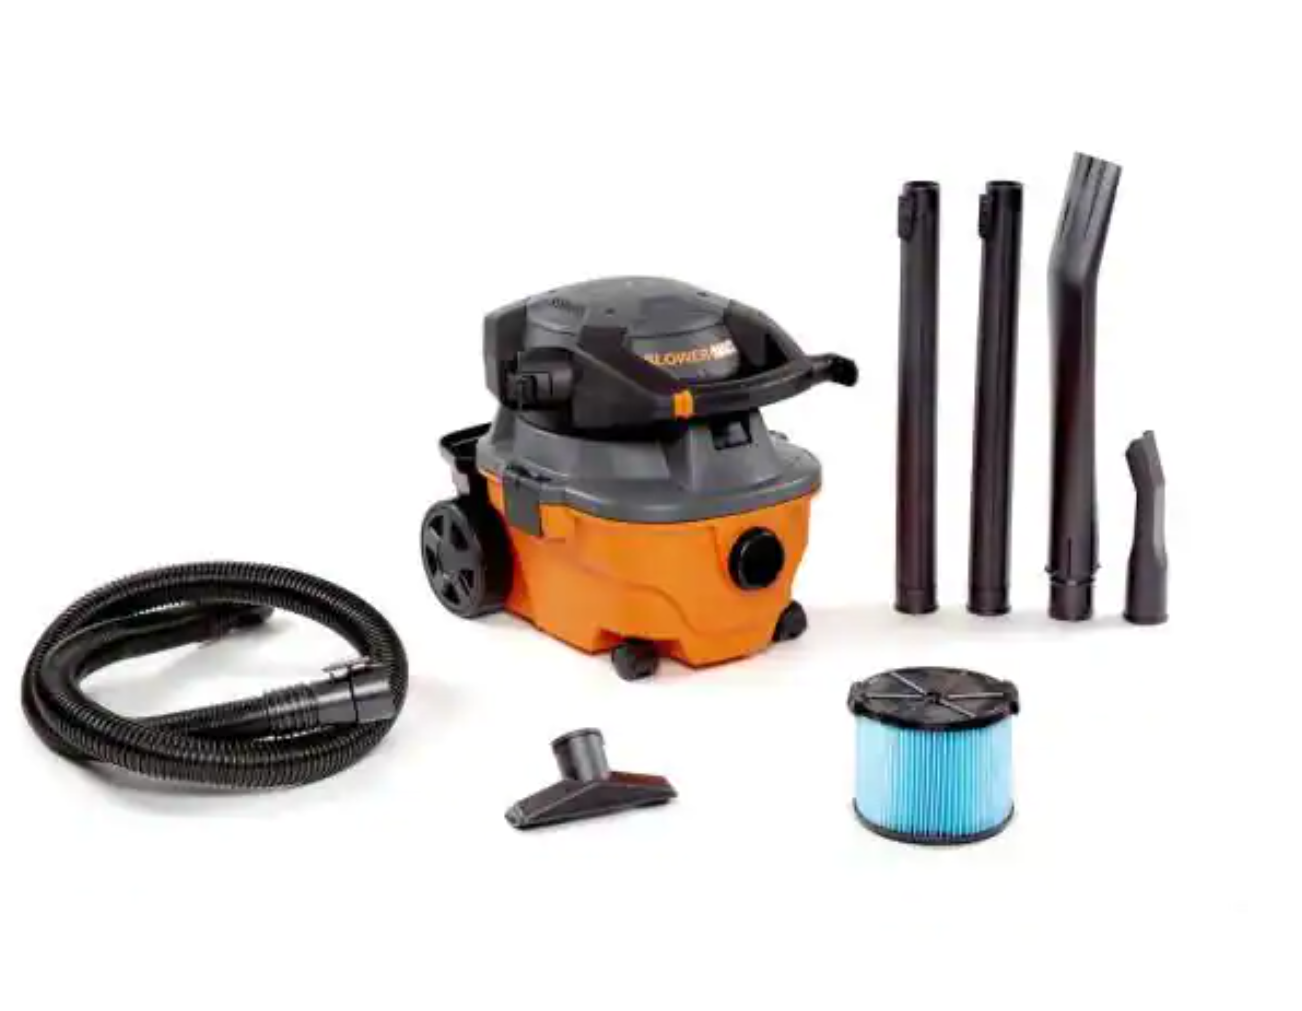 RIDGID 4 Gallon 6.0-Peak HP Wet/Dry Shop Vacuum with Detachable Blower, Fine Dust Filter, Hose and Accessories $99